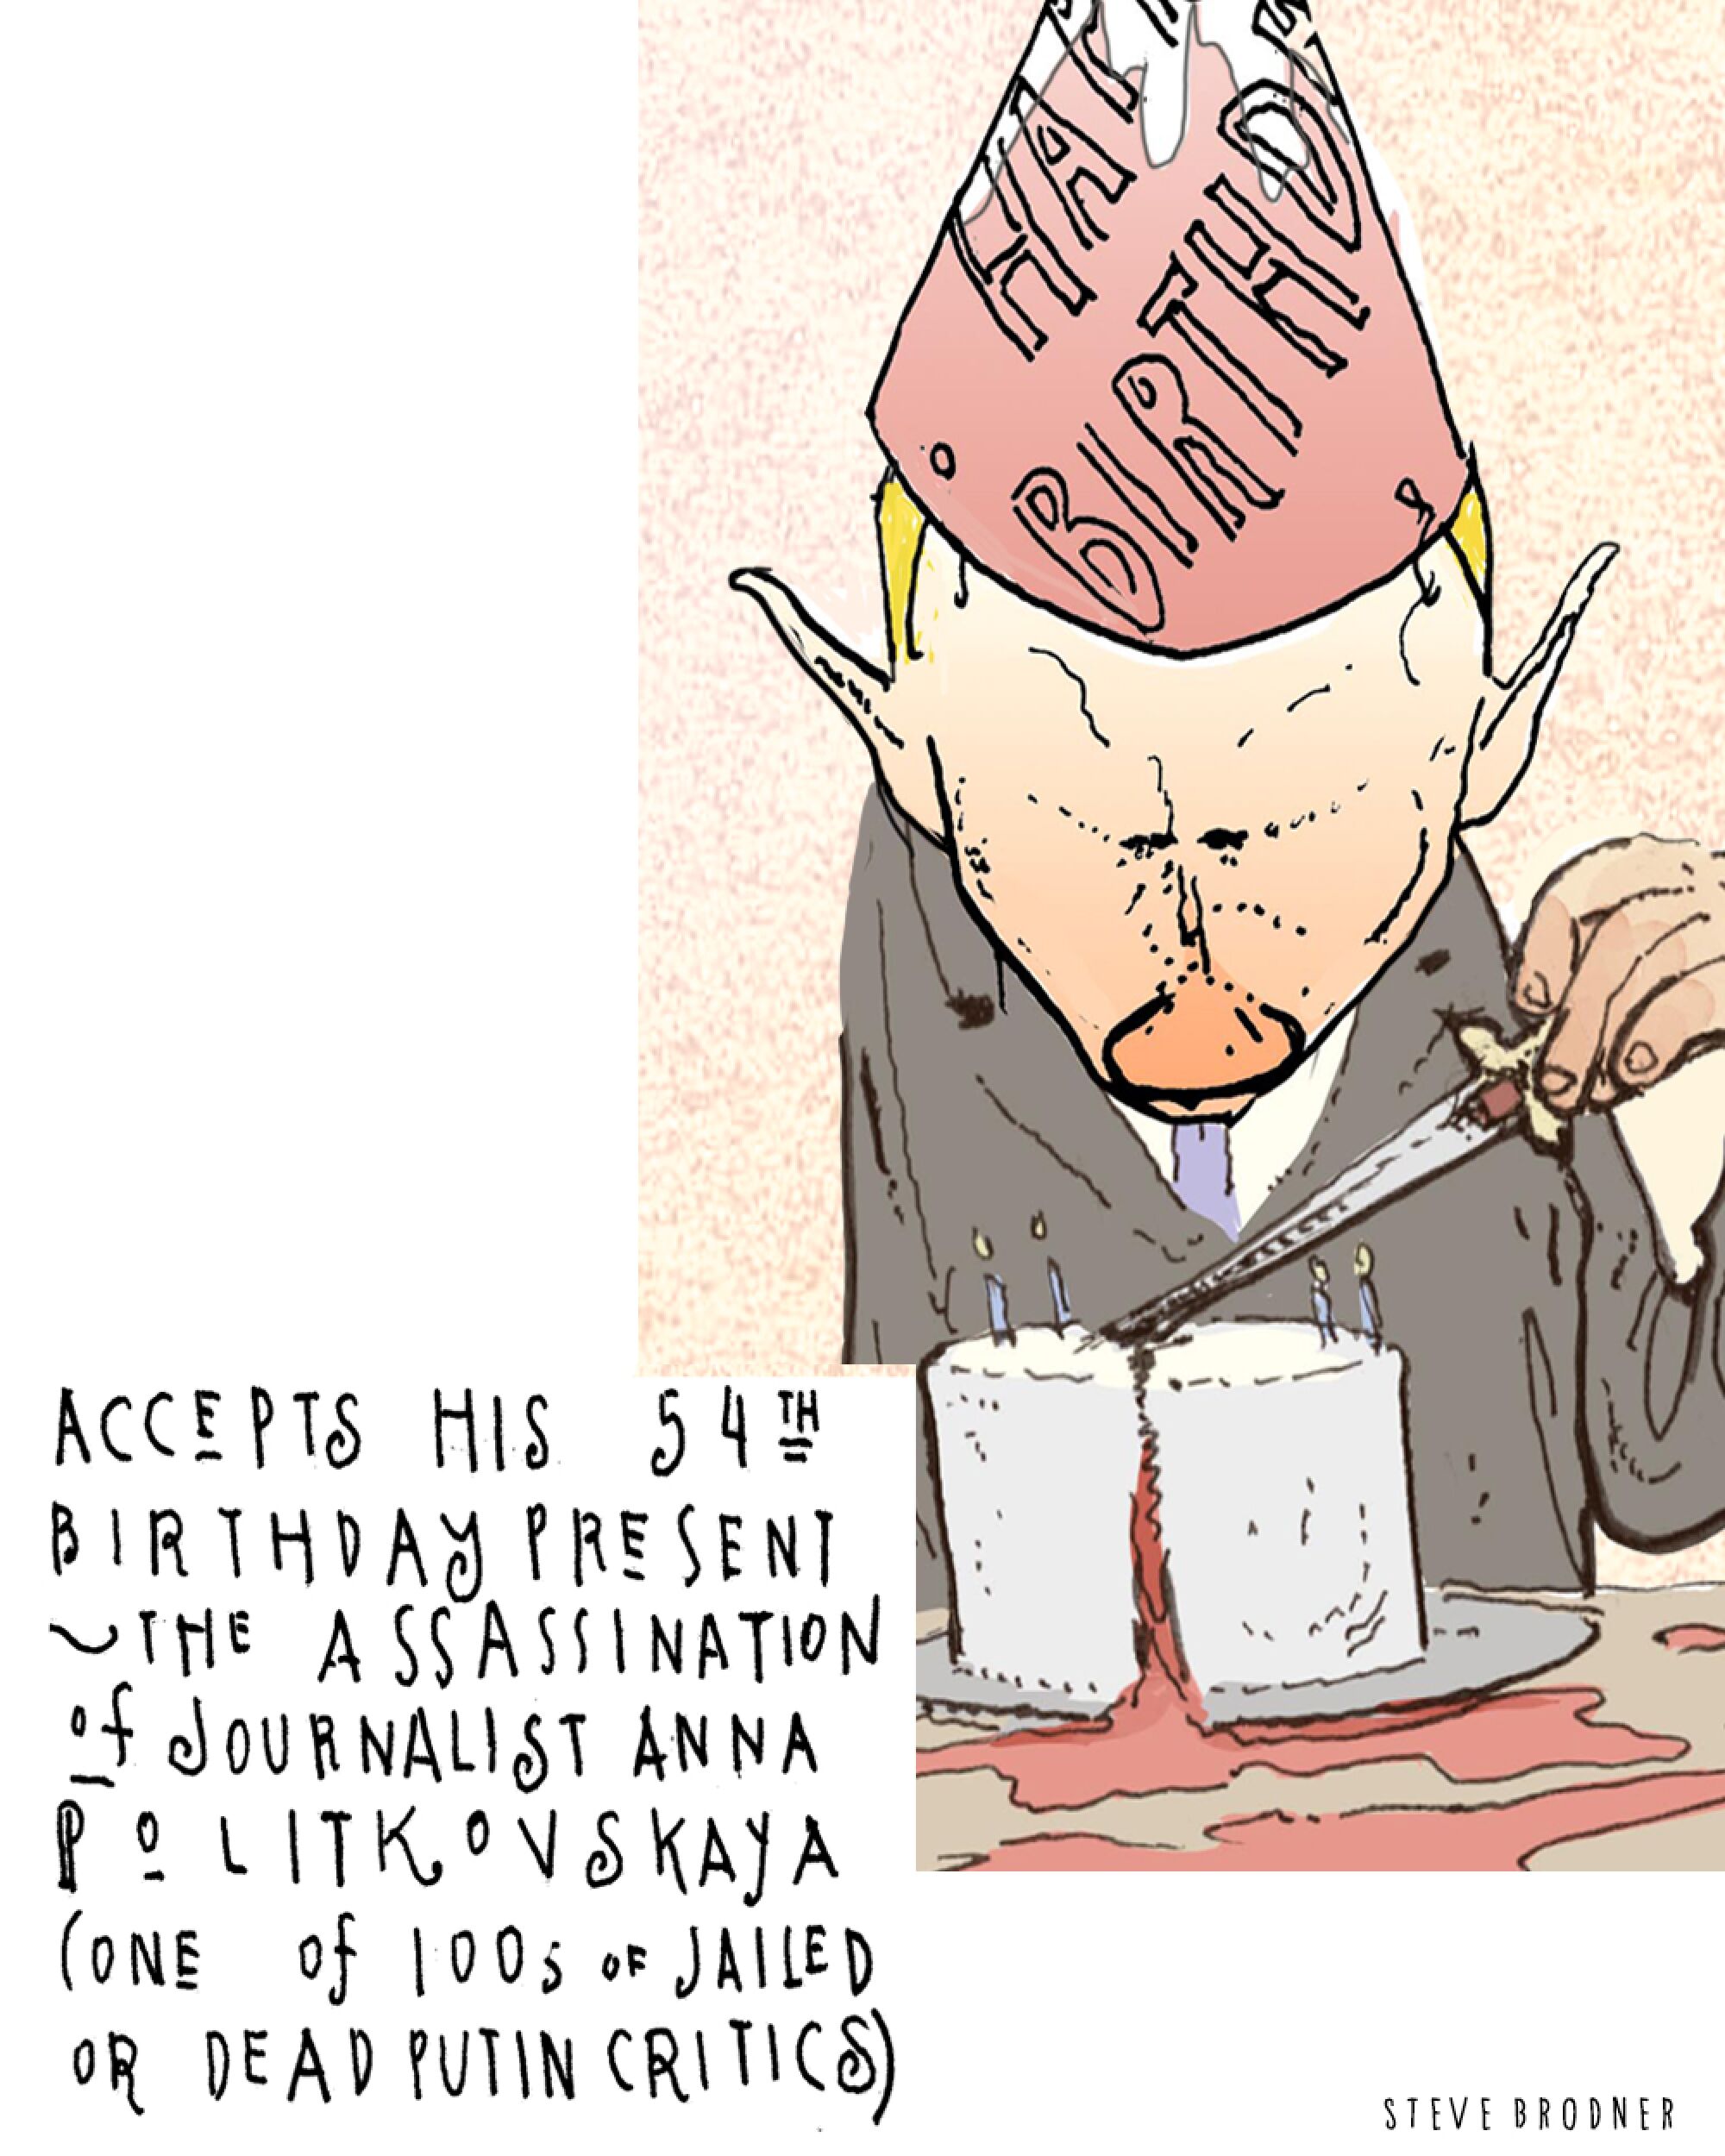 Cartoon of Putin with a cake. Text: "Accepts his 54th birthday present - the assassination of journalist Anna Politskovskaya"